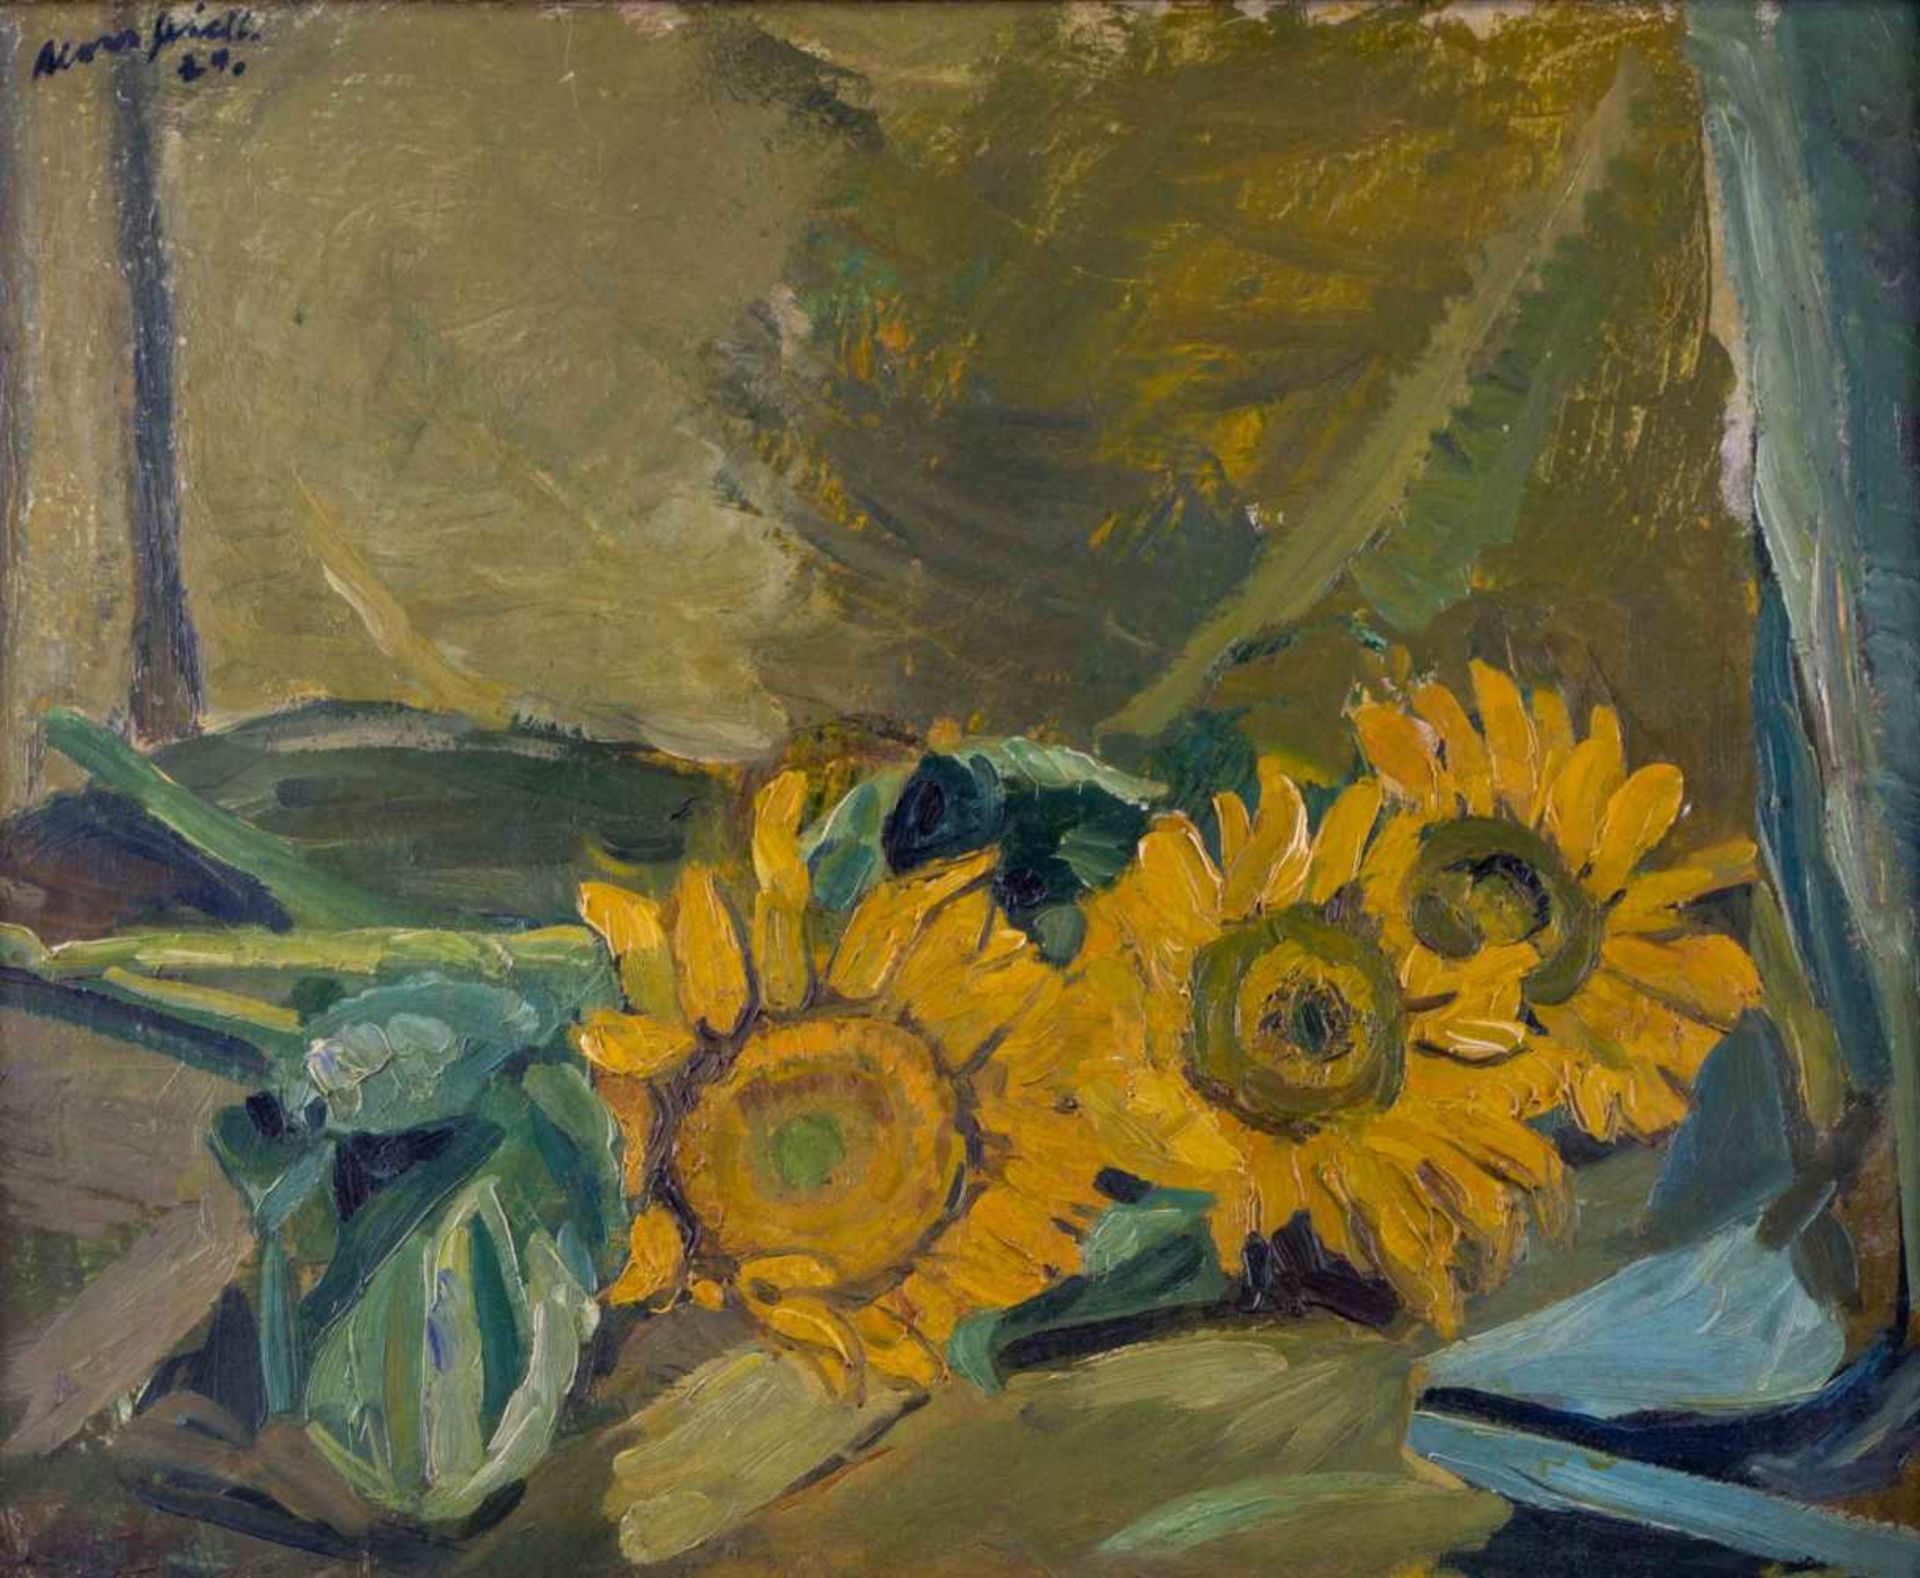 Alois SEIDL (1897-1970) "Stillleben mit Sonnenblumen" Gemälde Öl/Leinwand, 50 cm x 60 cm, links oben